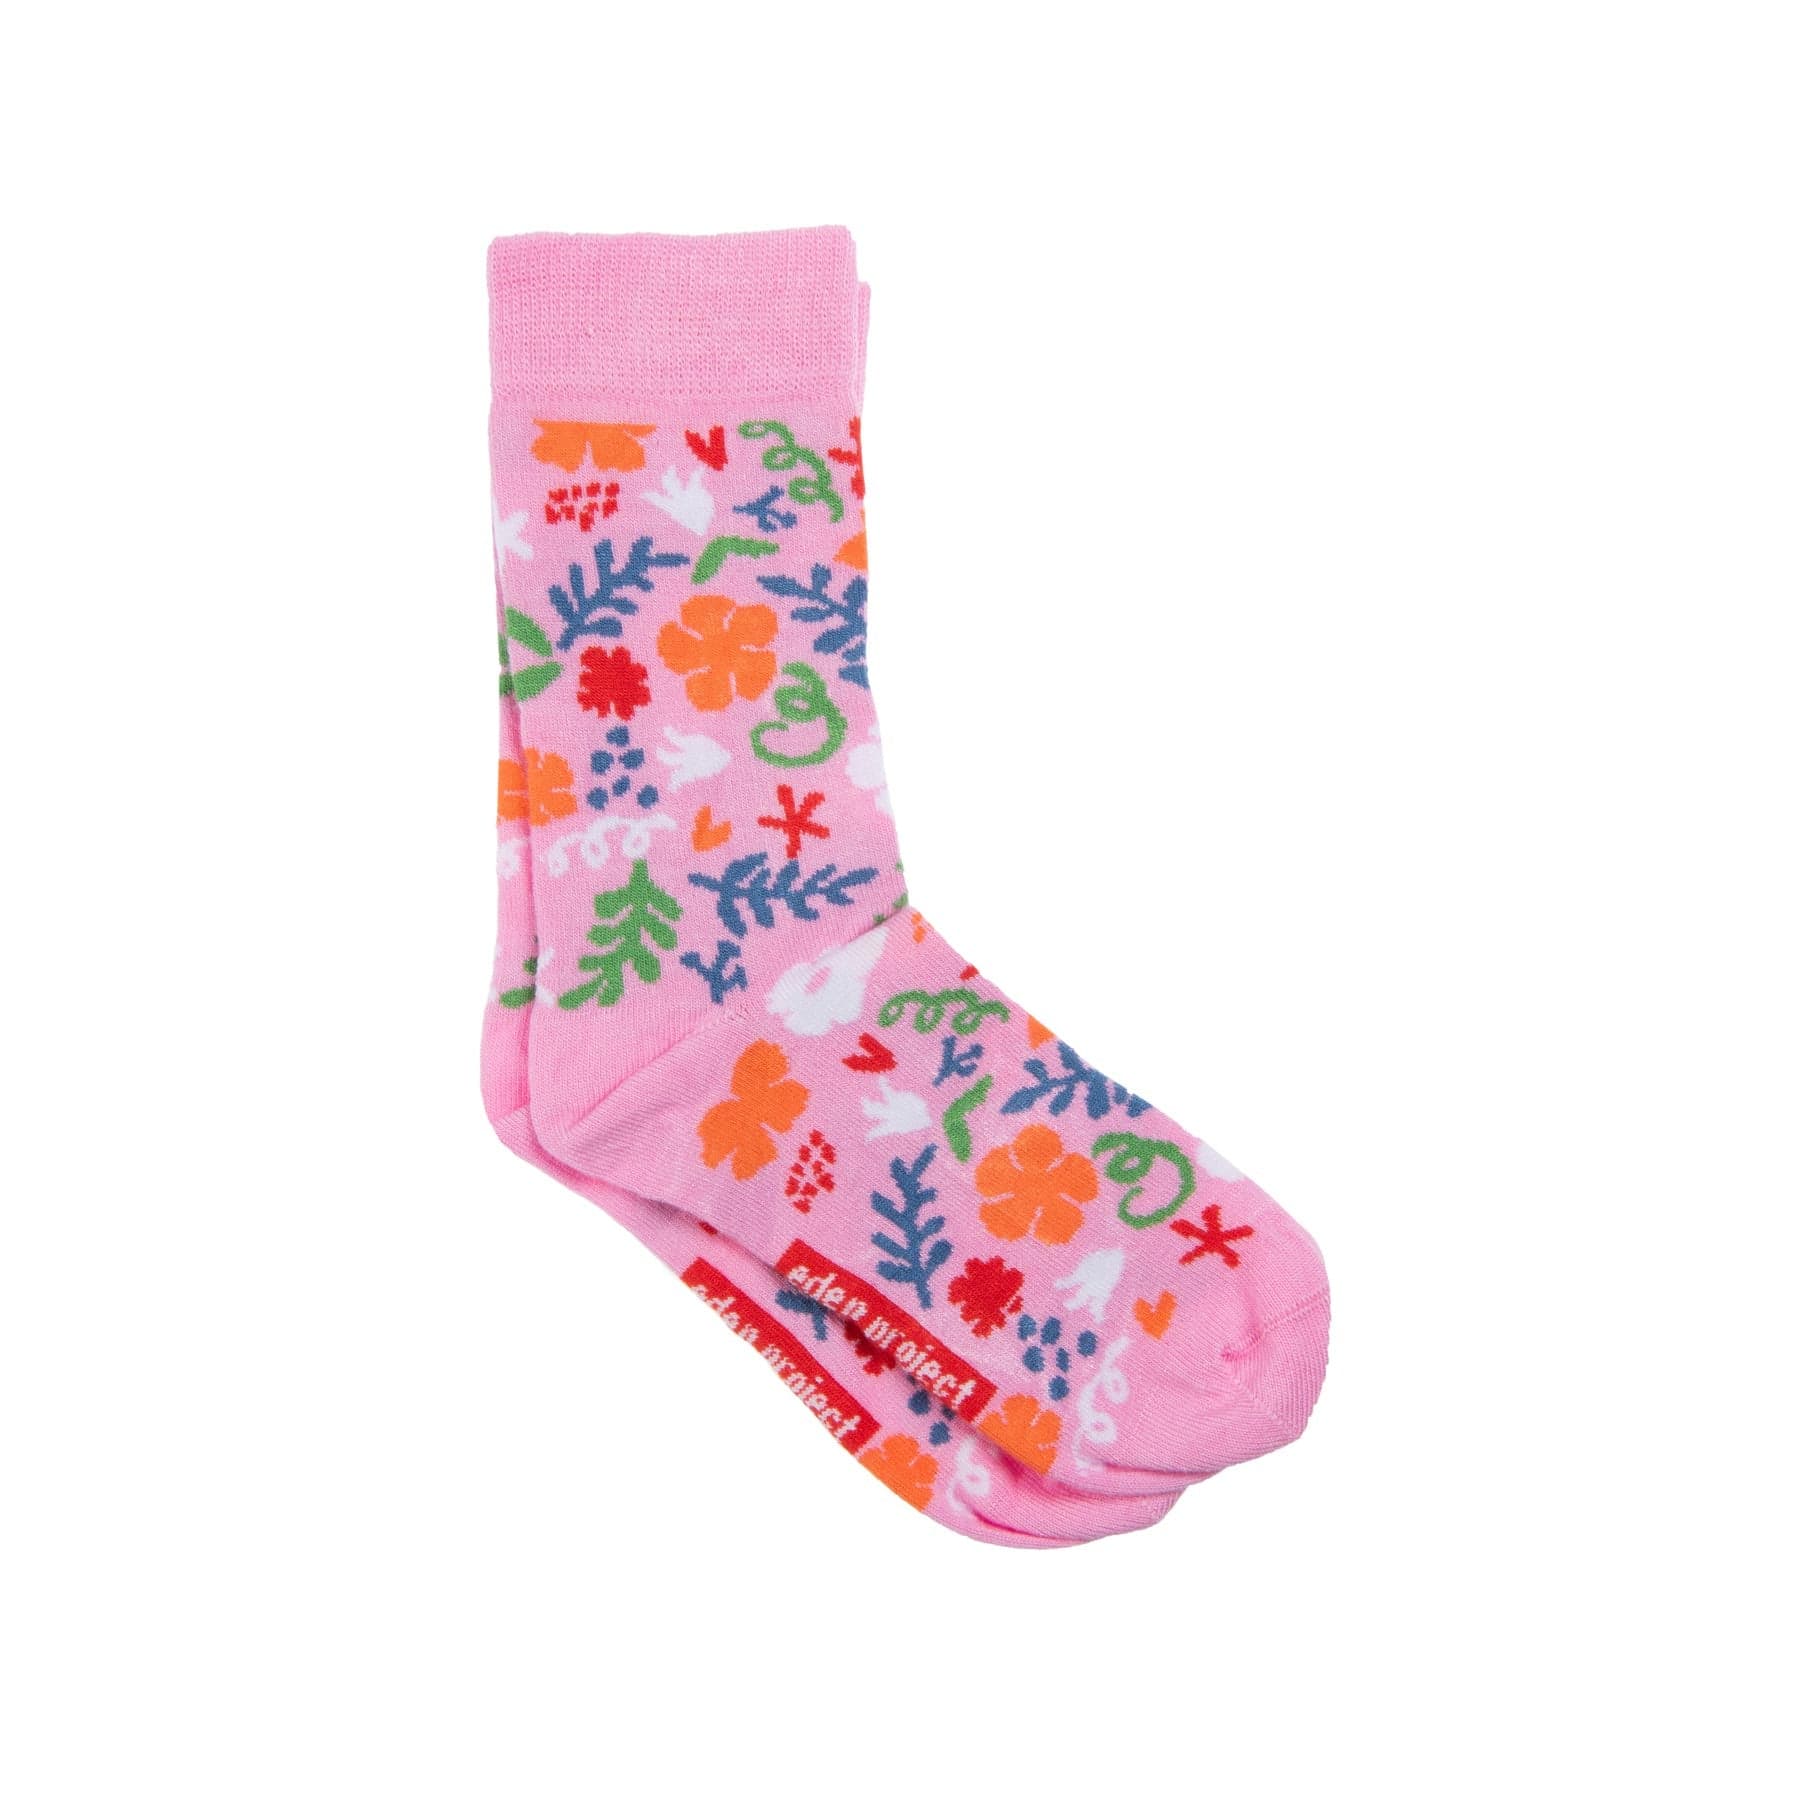 Pink ditsy floral print socks